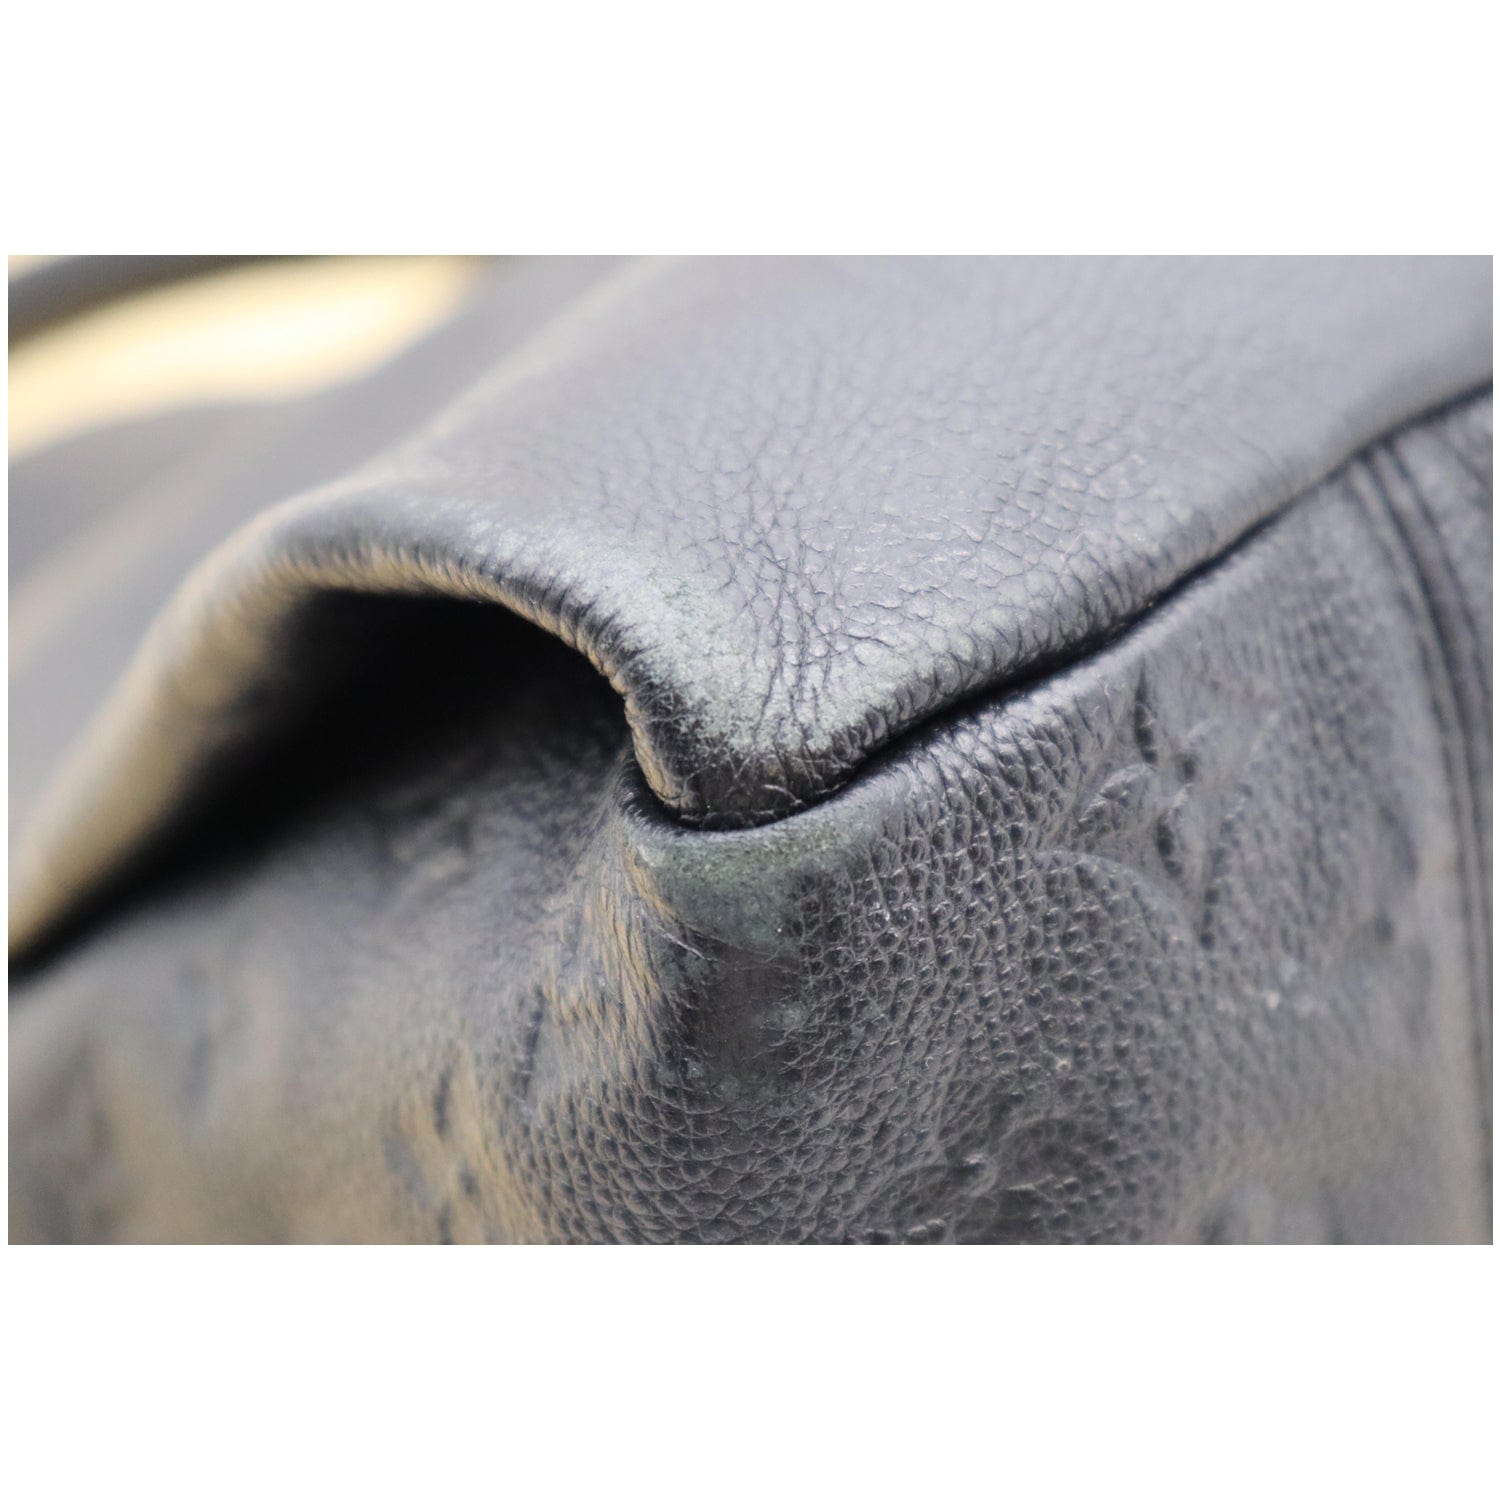 Louis Vuitton Artsy MM Monogram Empreinte Leather Ombre – The Bag Broker